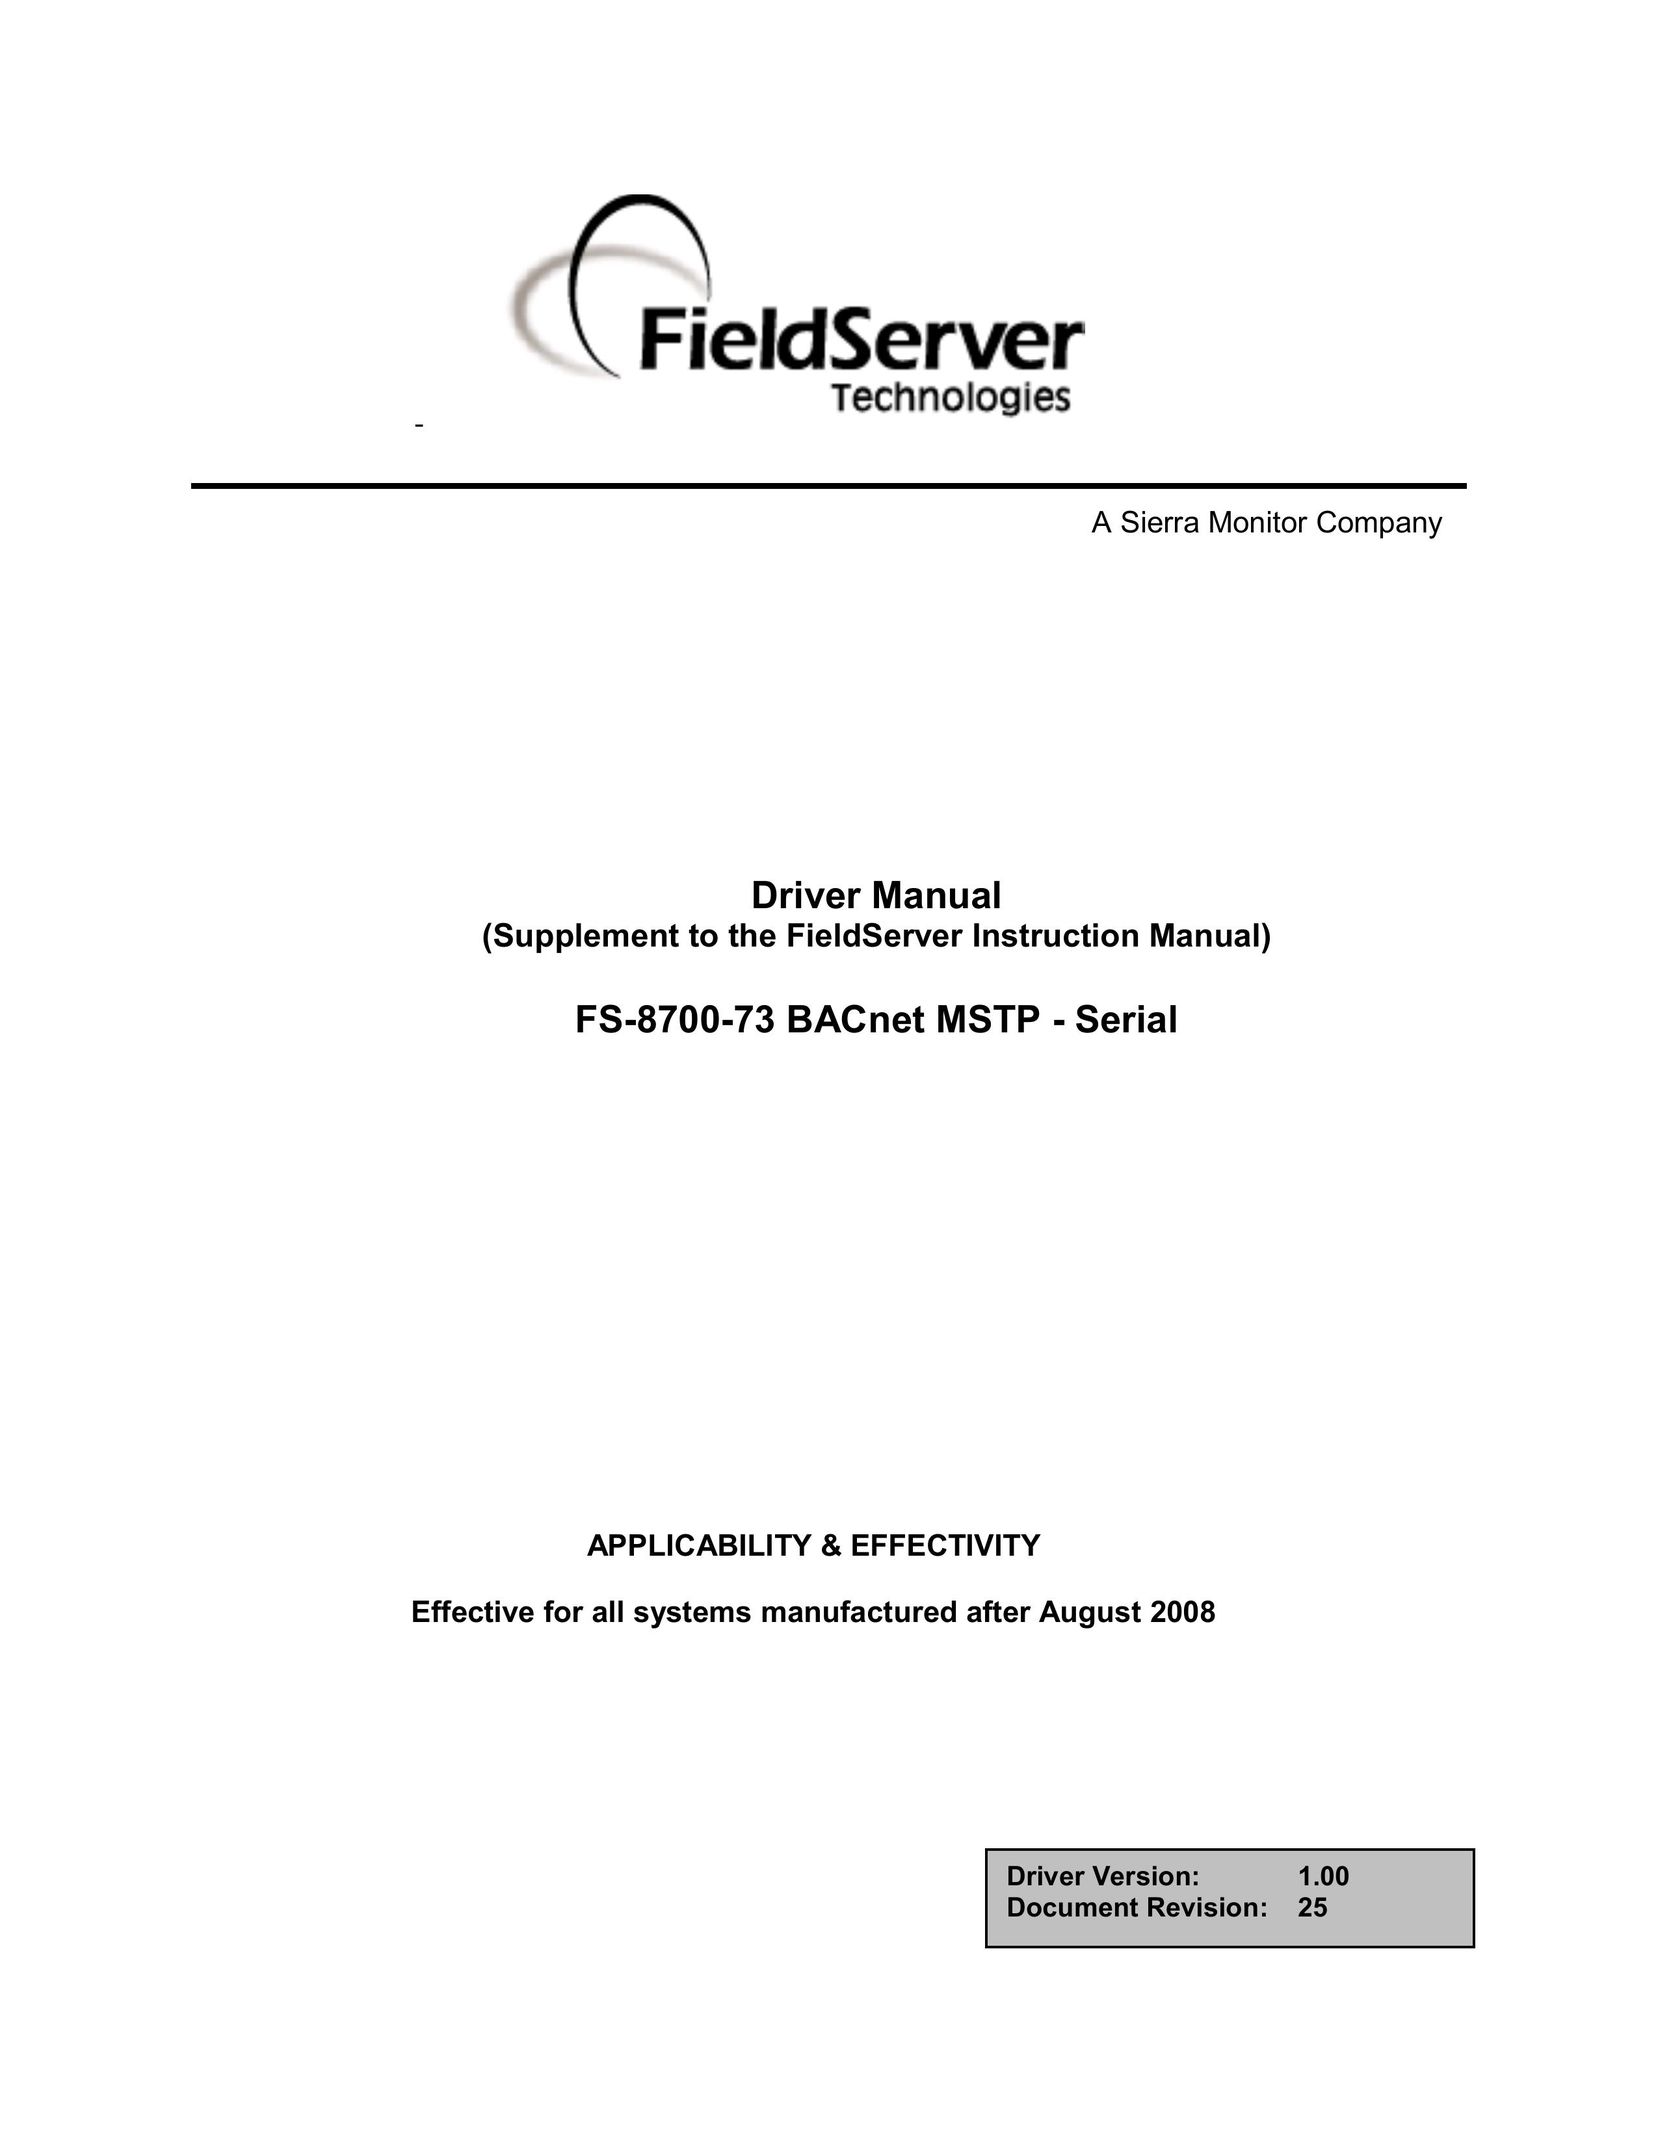 FieldServer FS-8700-73 Computer Drive User Manual